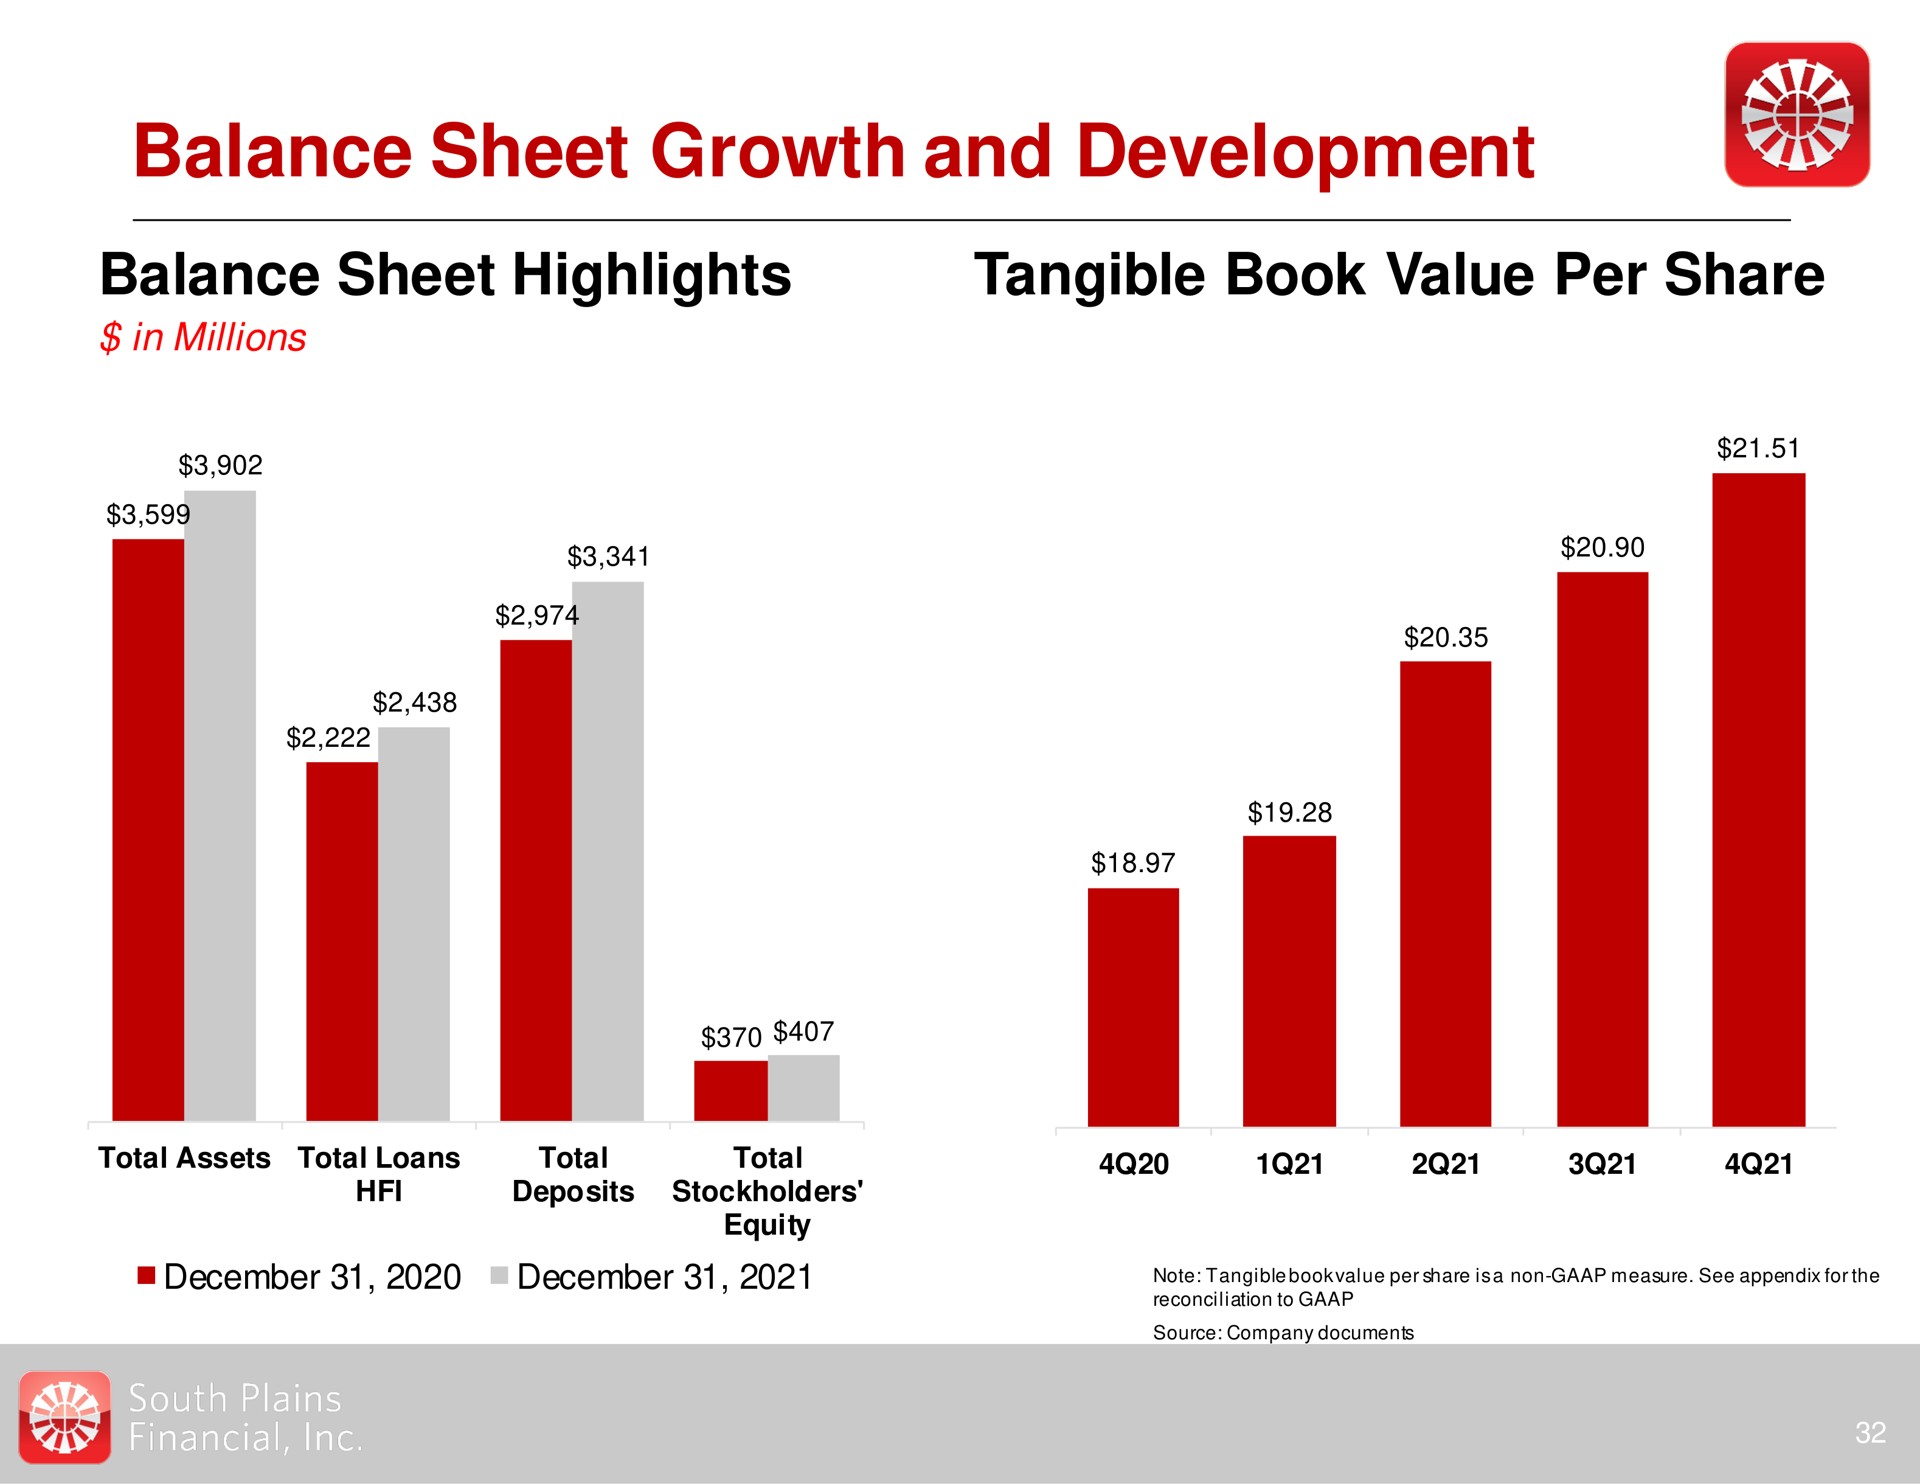 balance sheet growth and development balance sheet highlights tangible book value per share | South Plains Financial